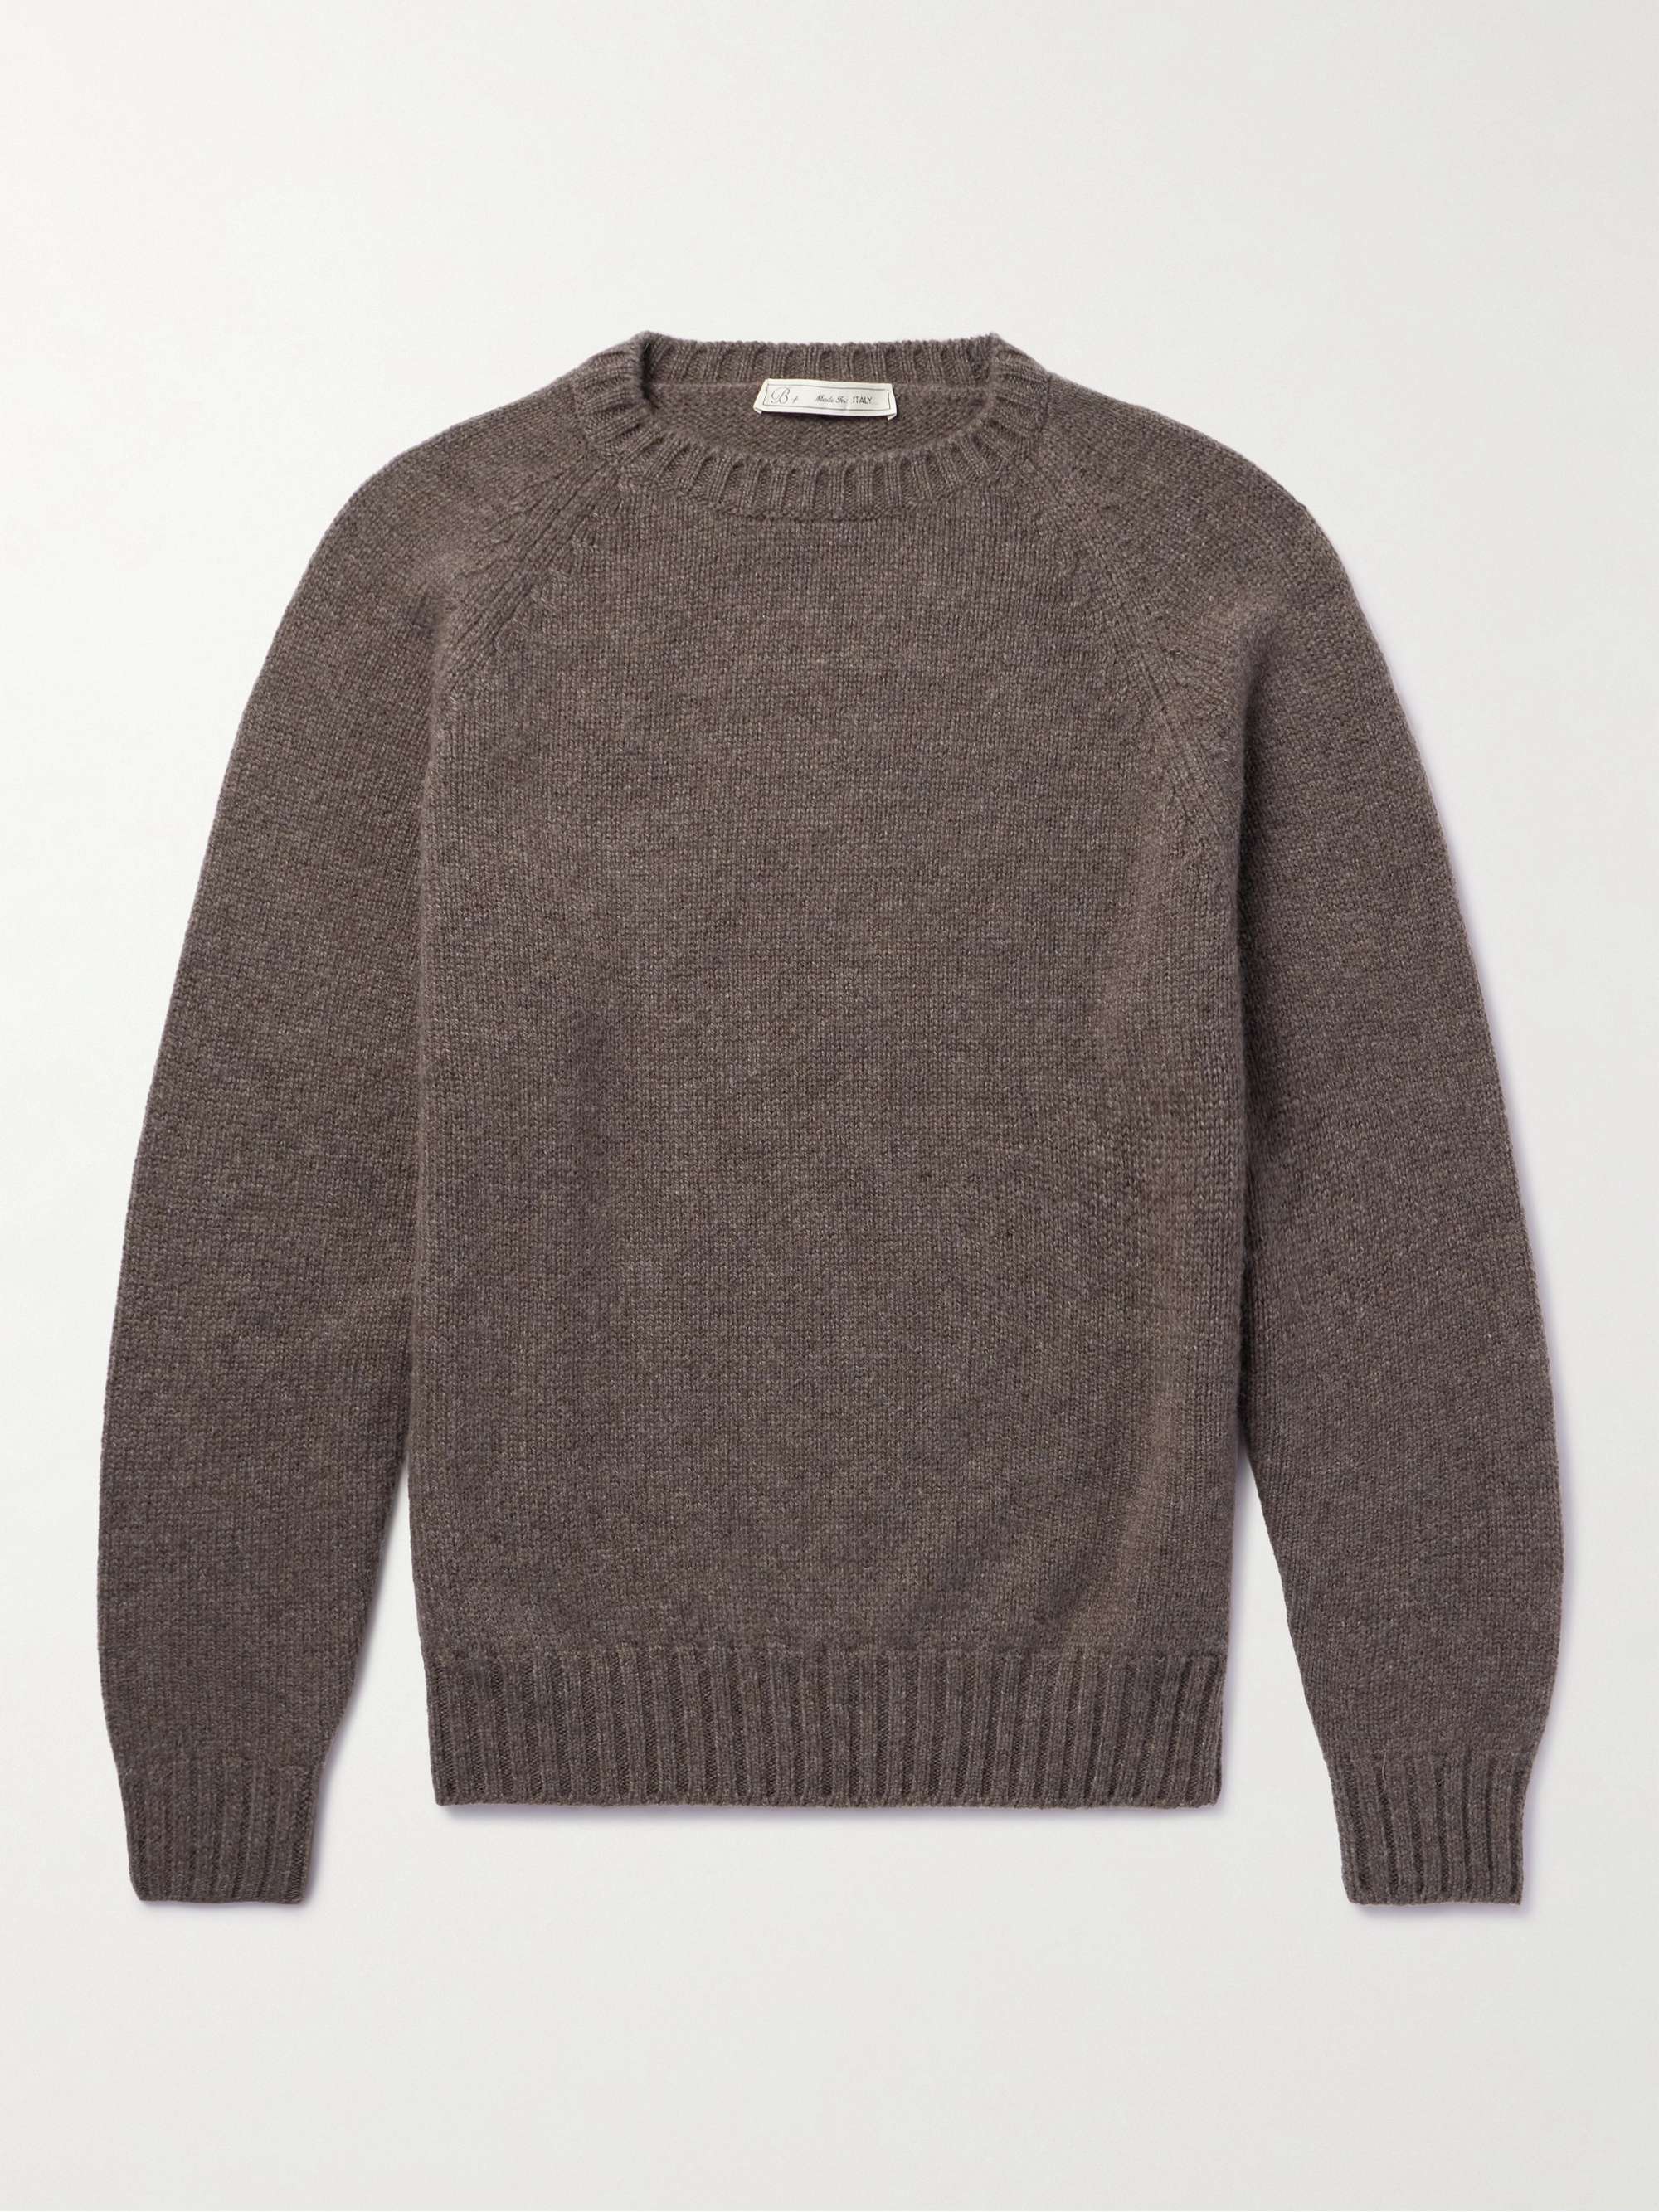 UMIT BENAN B+ Cashmere Sweater for Men | MR PORTER